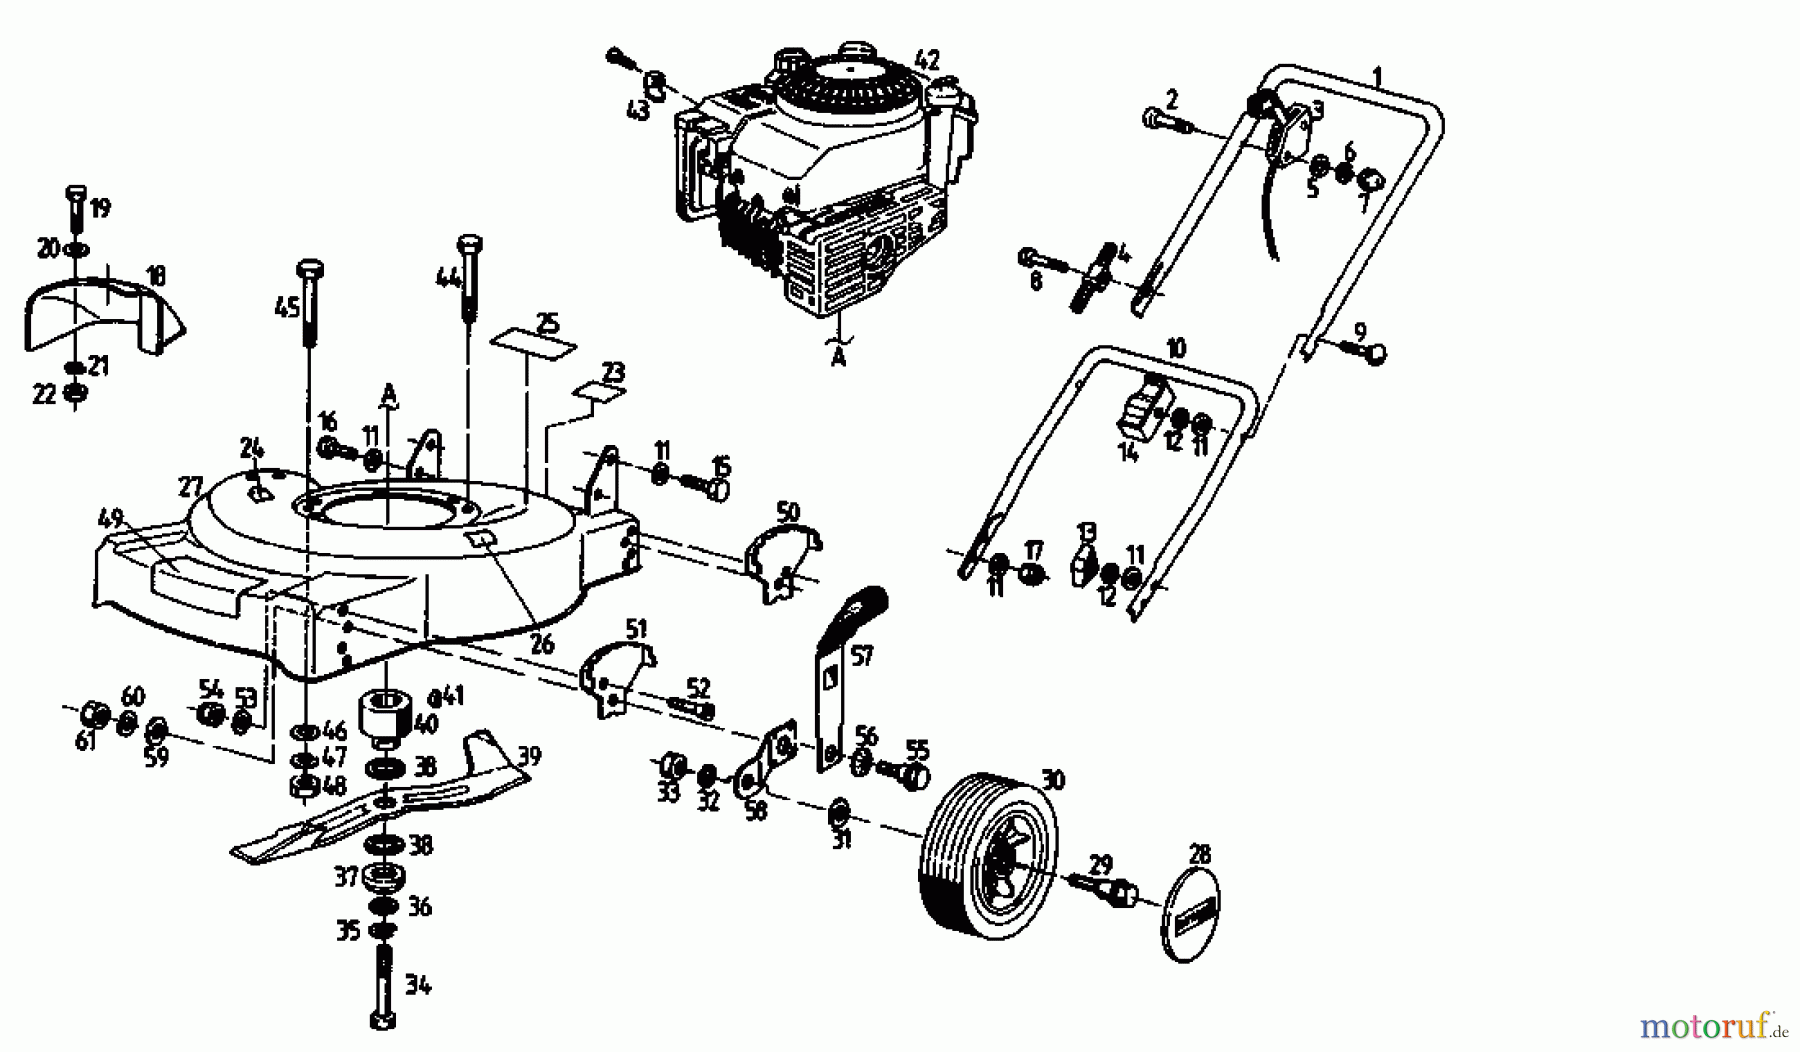  Gutbrod Petrol mower TURBO SBS-48 02670.03  (1993) Basic machine